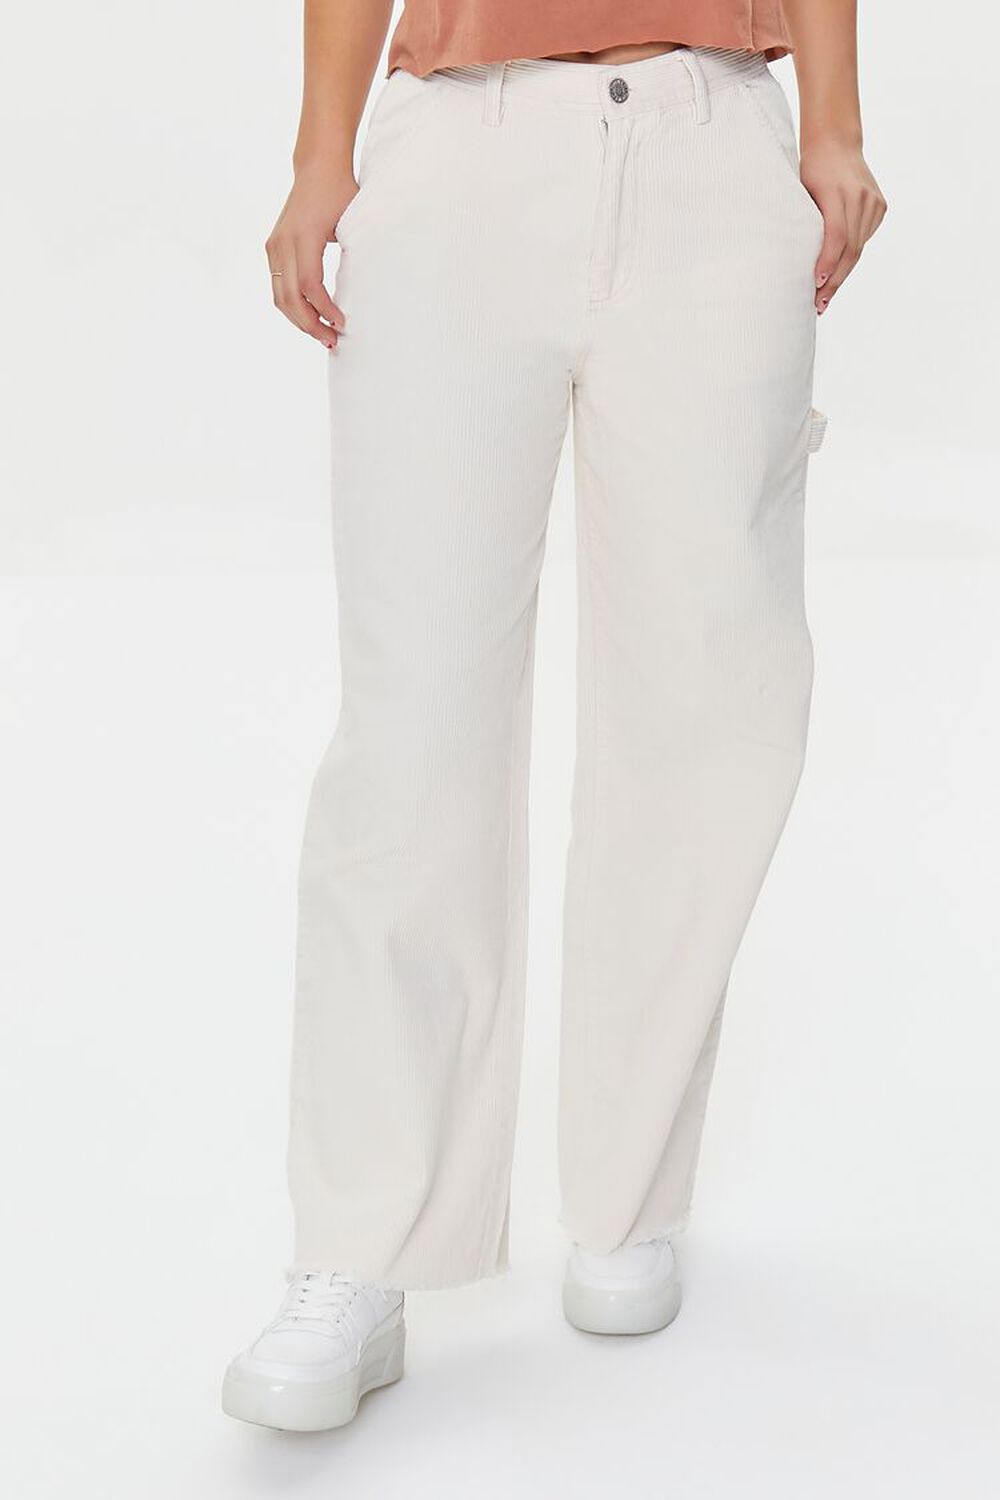 Corduroy Frayed Pants, image 2